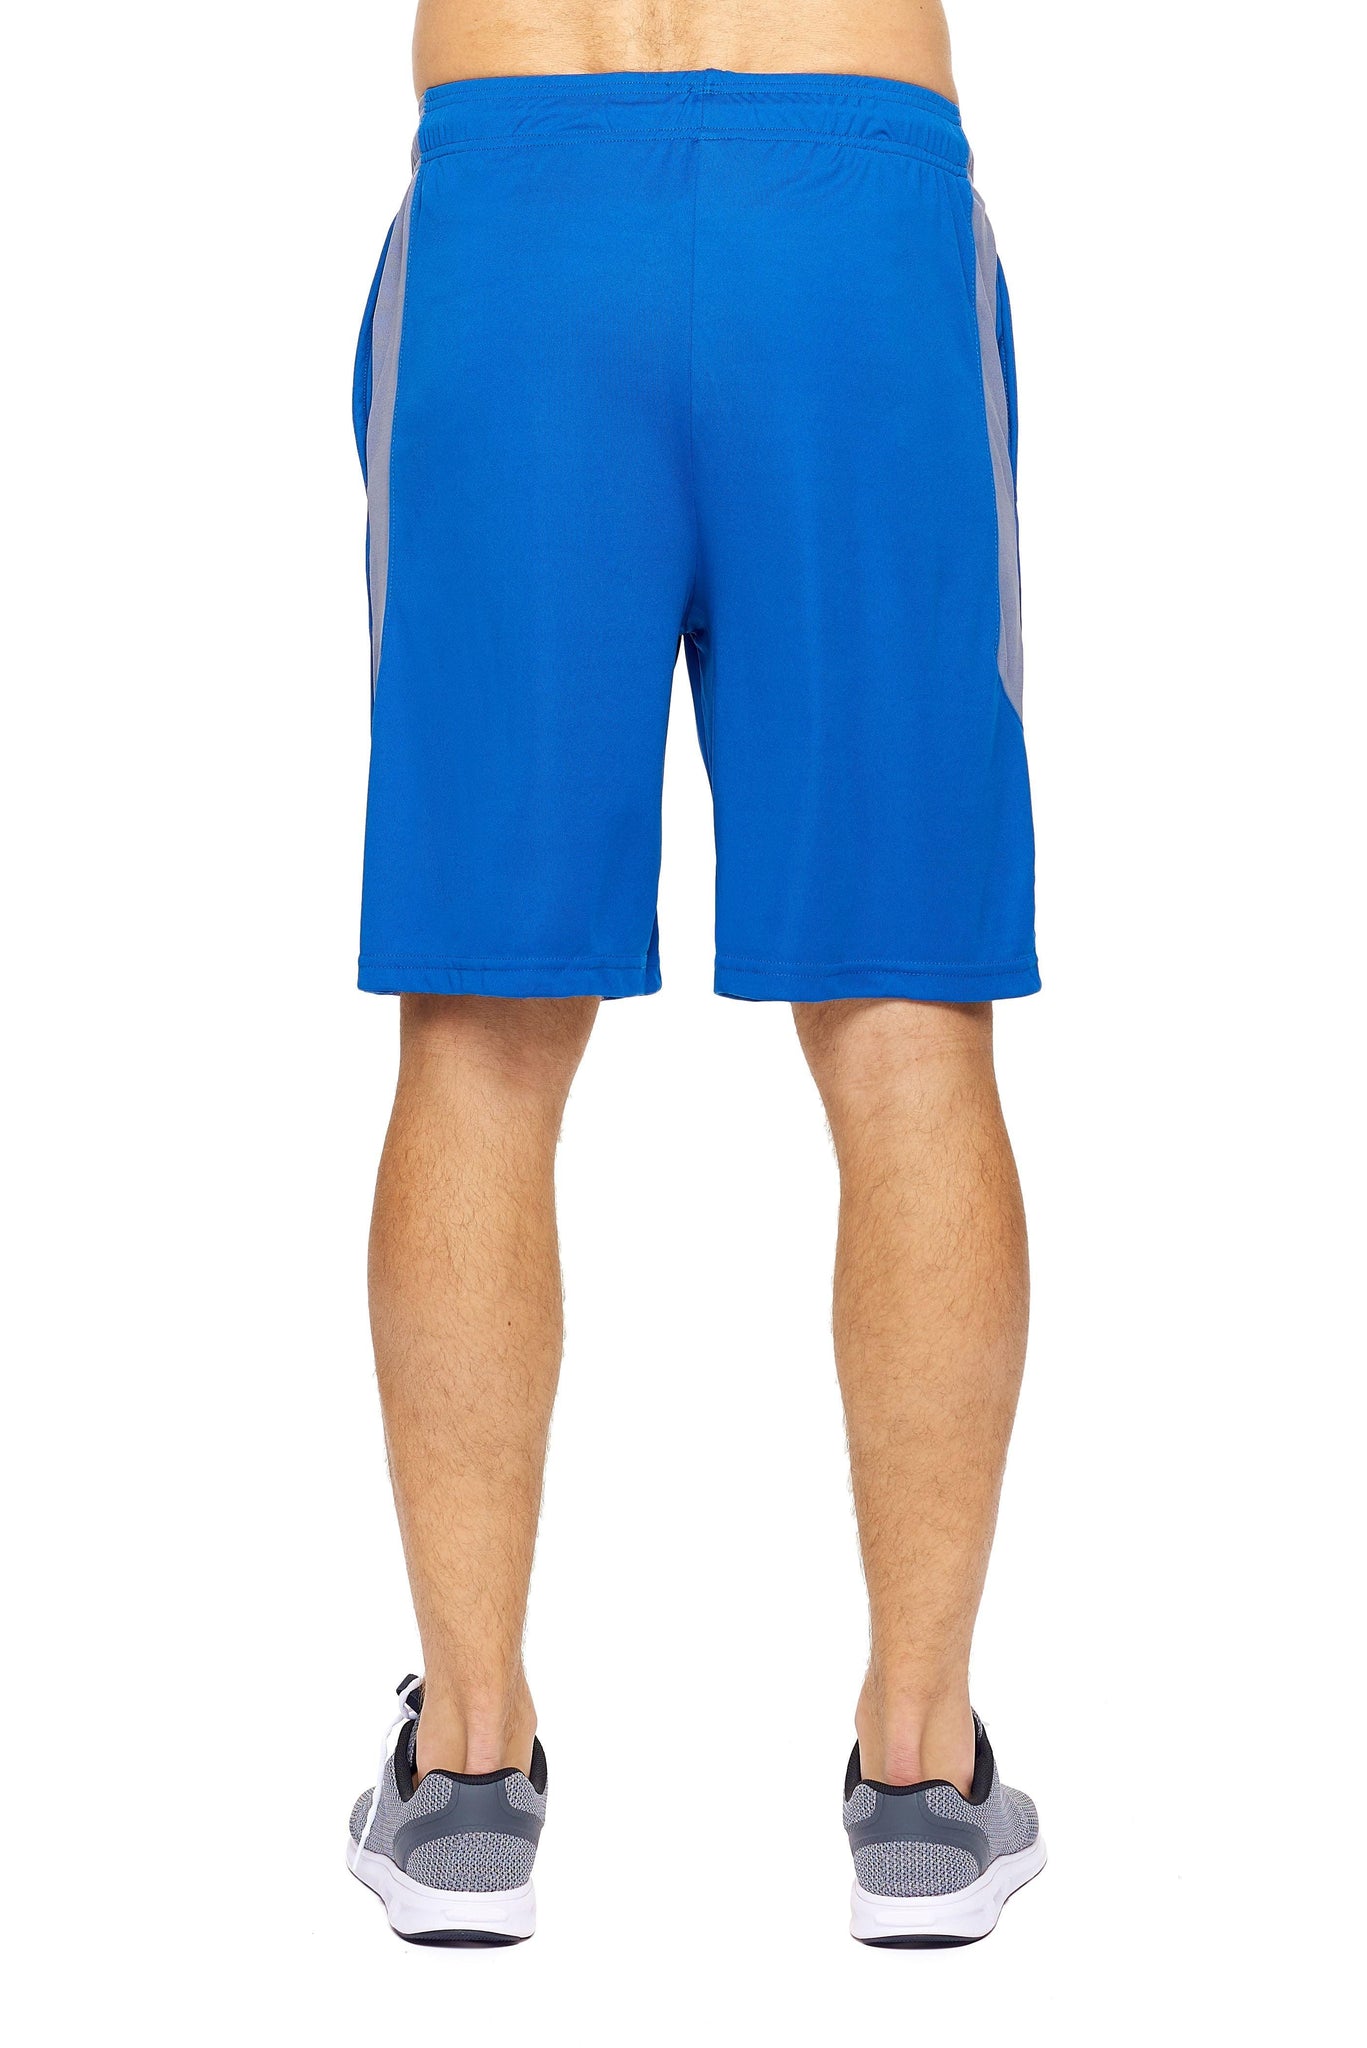 Expert Brand Men's Royal Blue pk MaX™ Outdoor Shorts Image 4#royal-steel